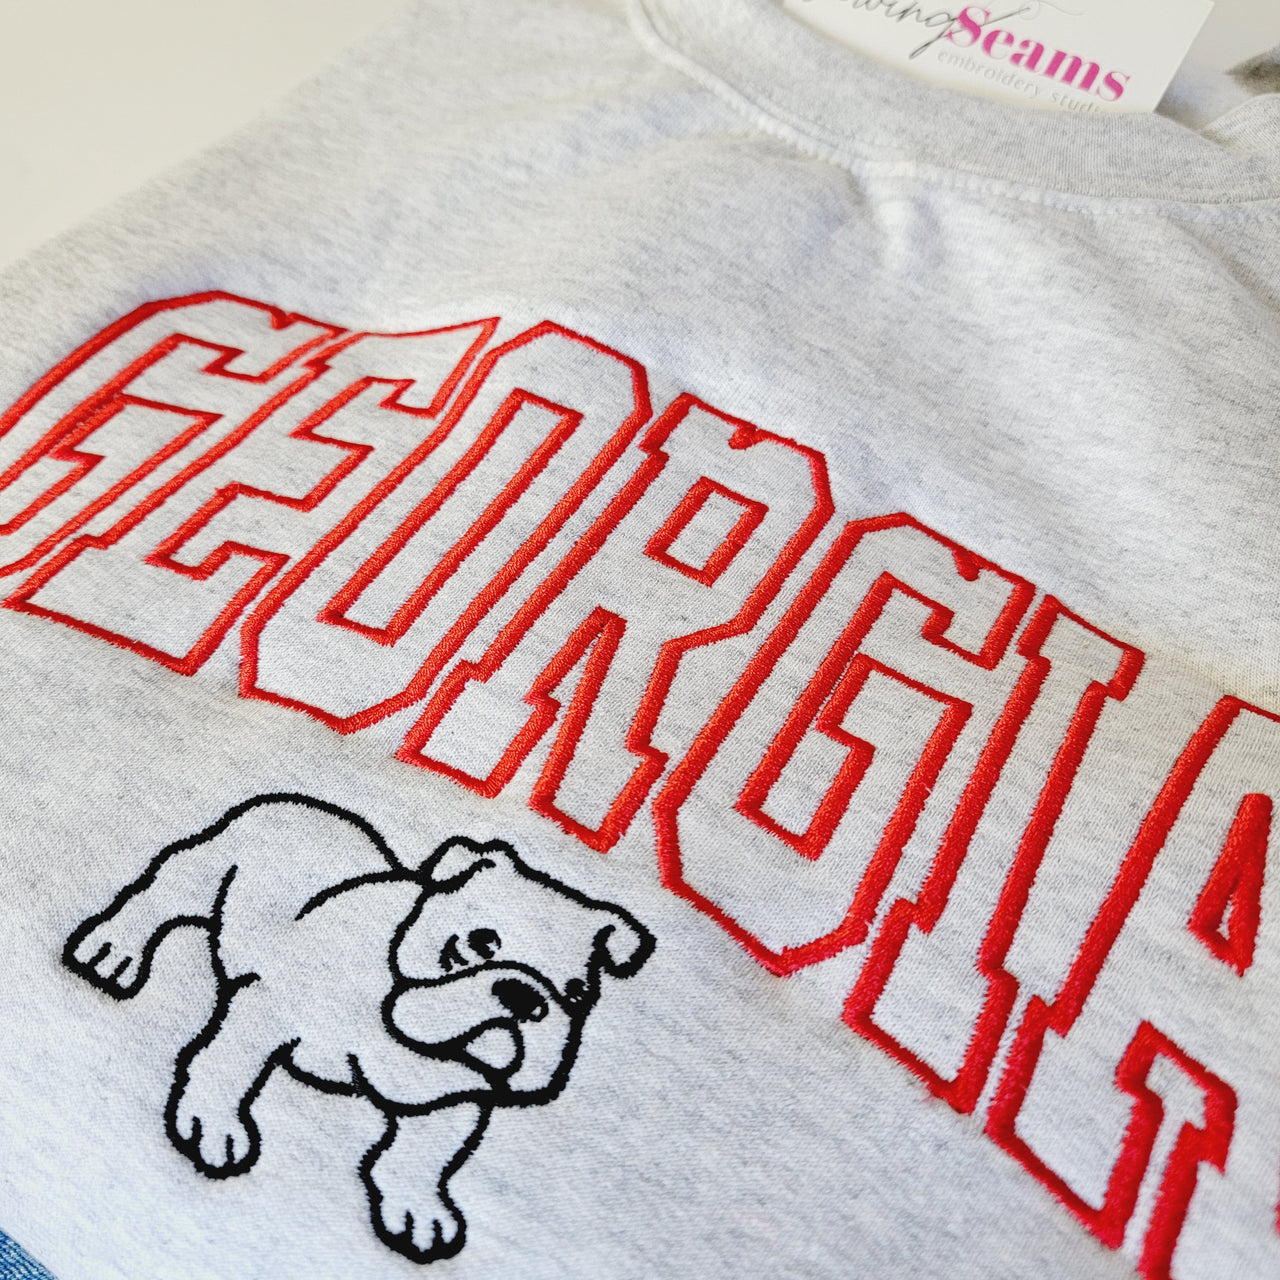 Georgia Bulldog Shirt